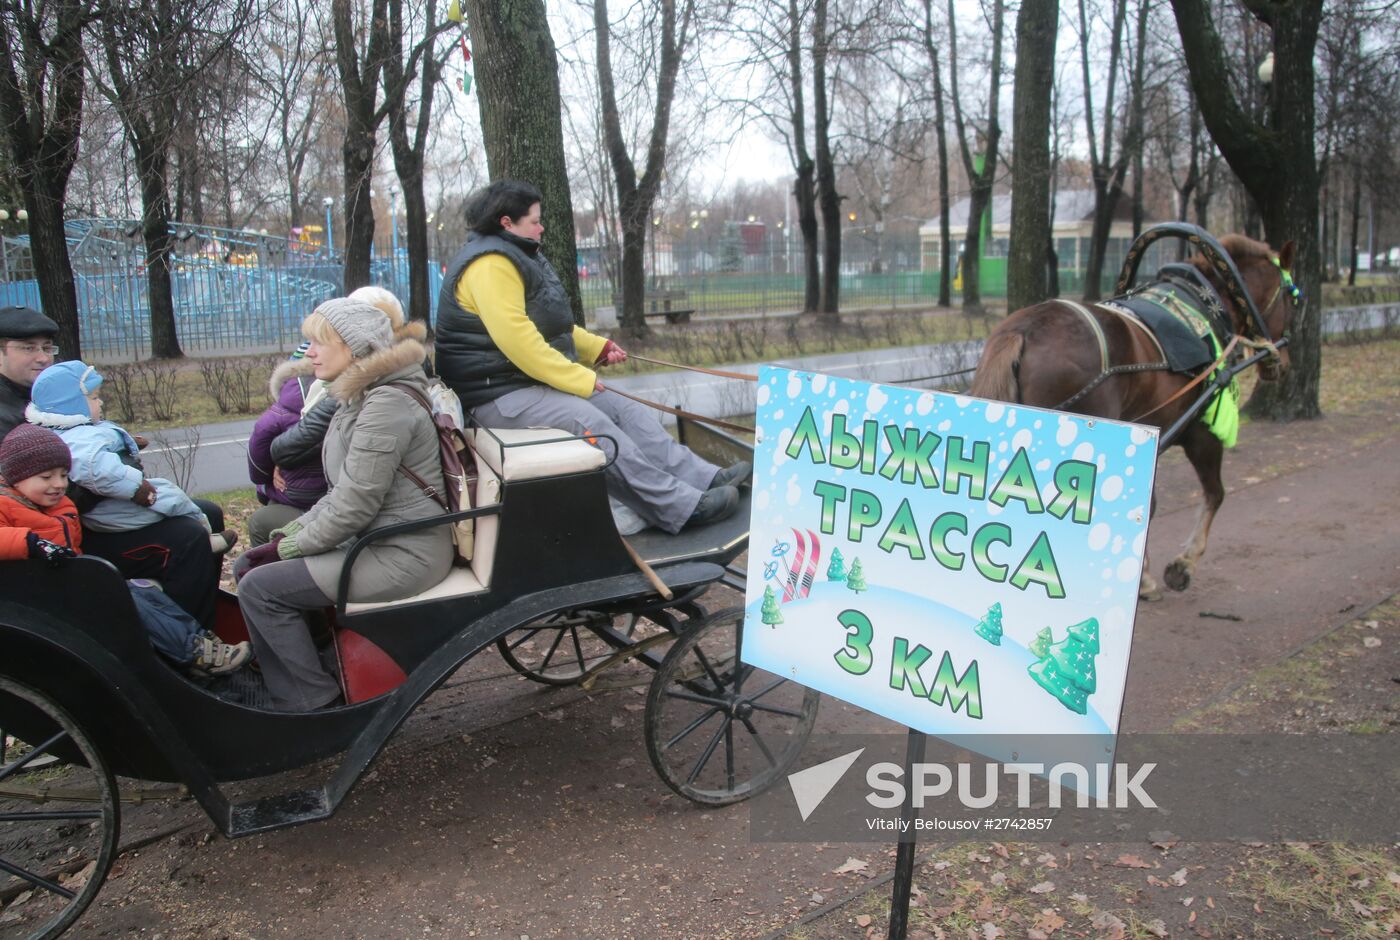 Moscow parks kick off winter season